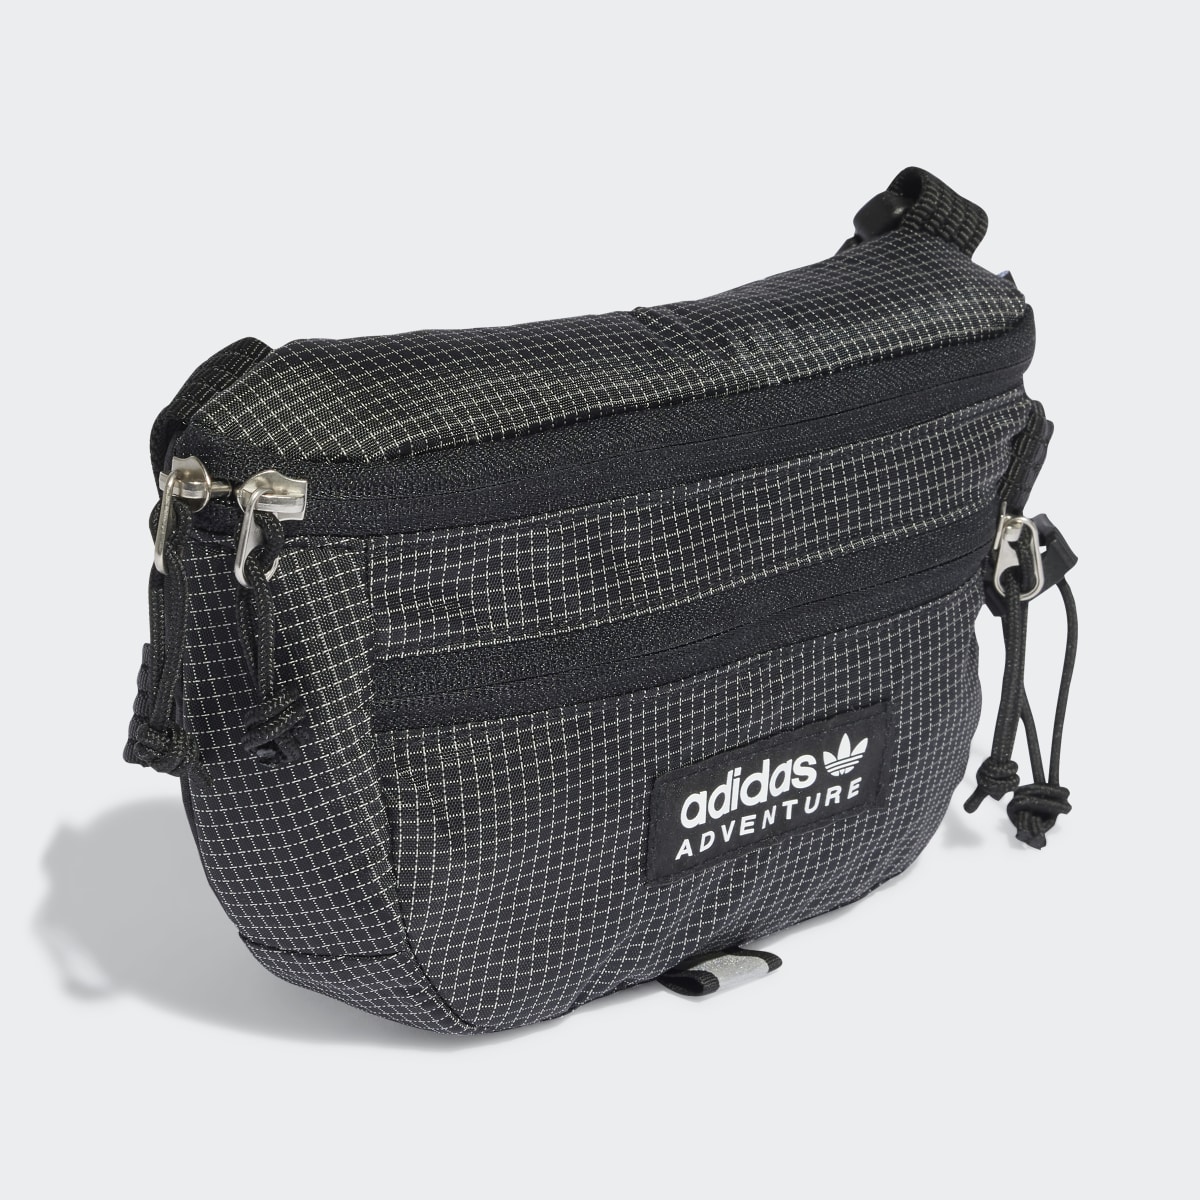 Adidas Adventure Waist Bag Small. 4